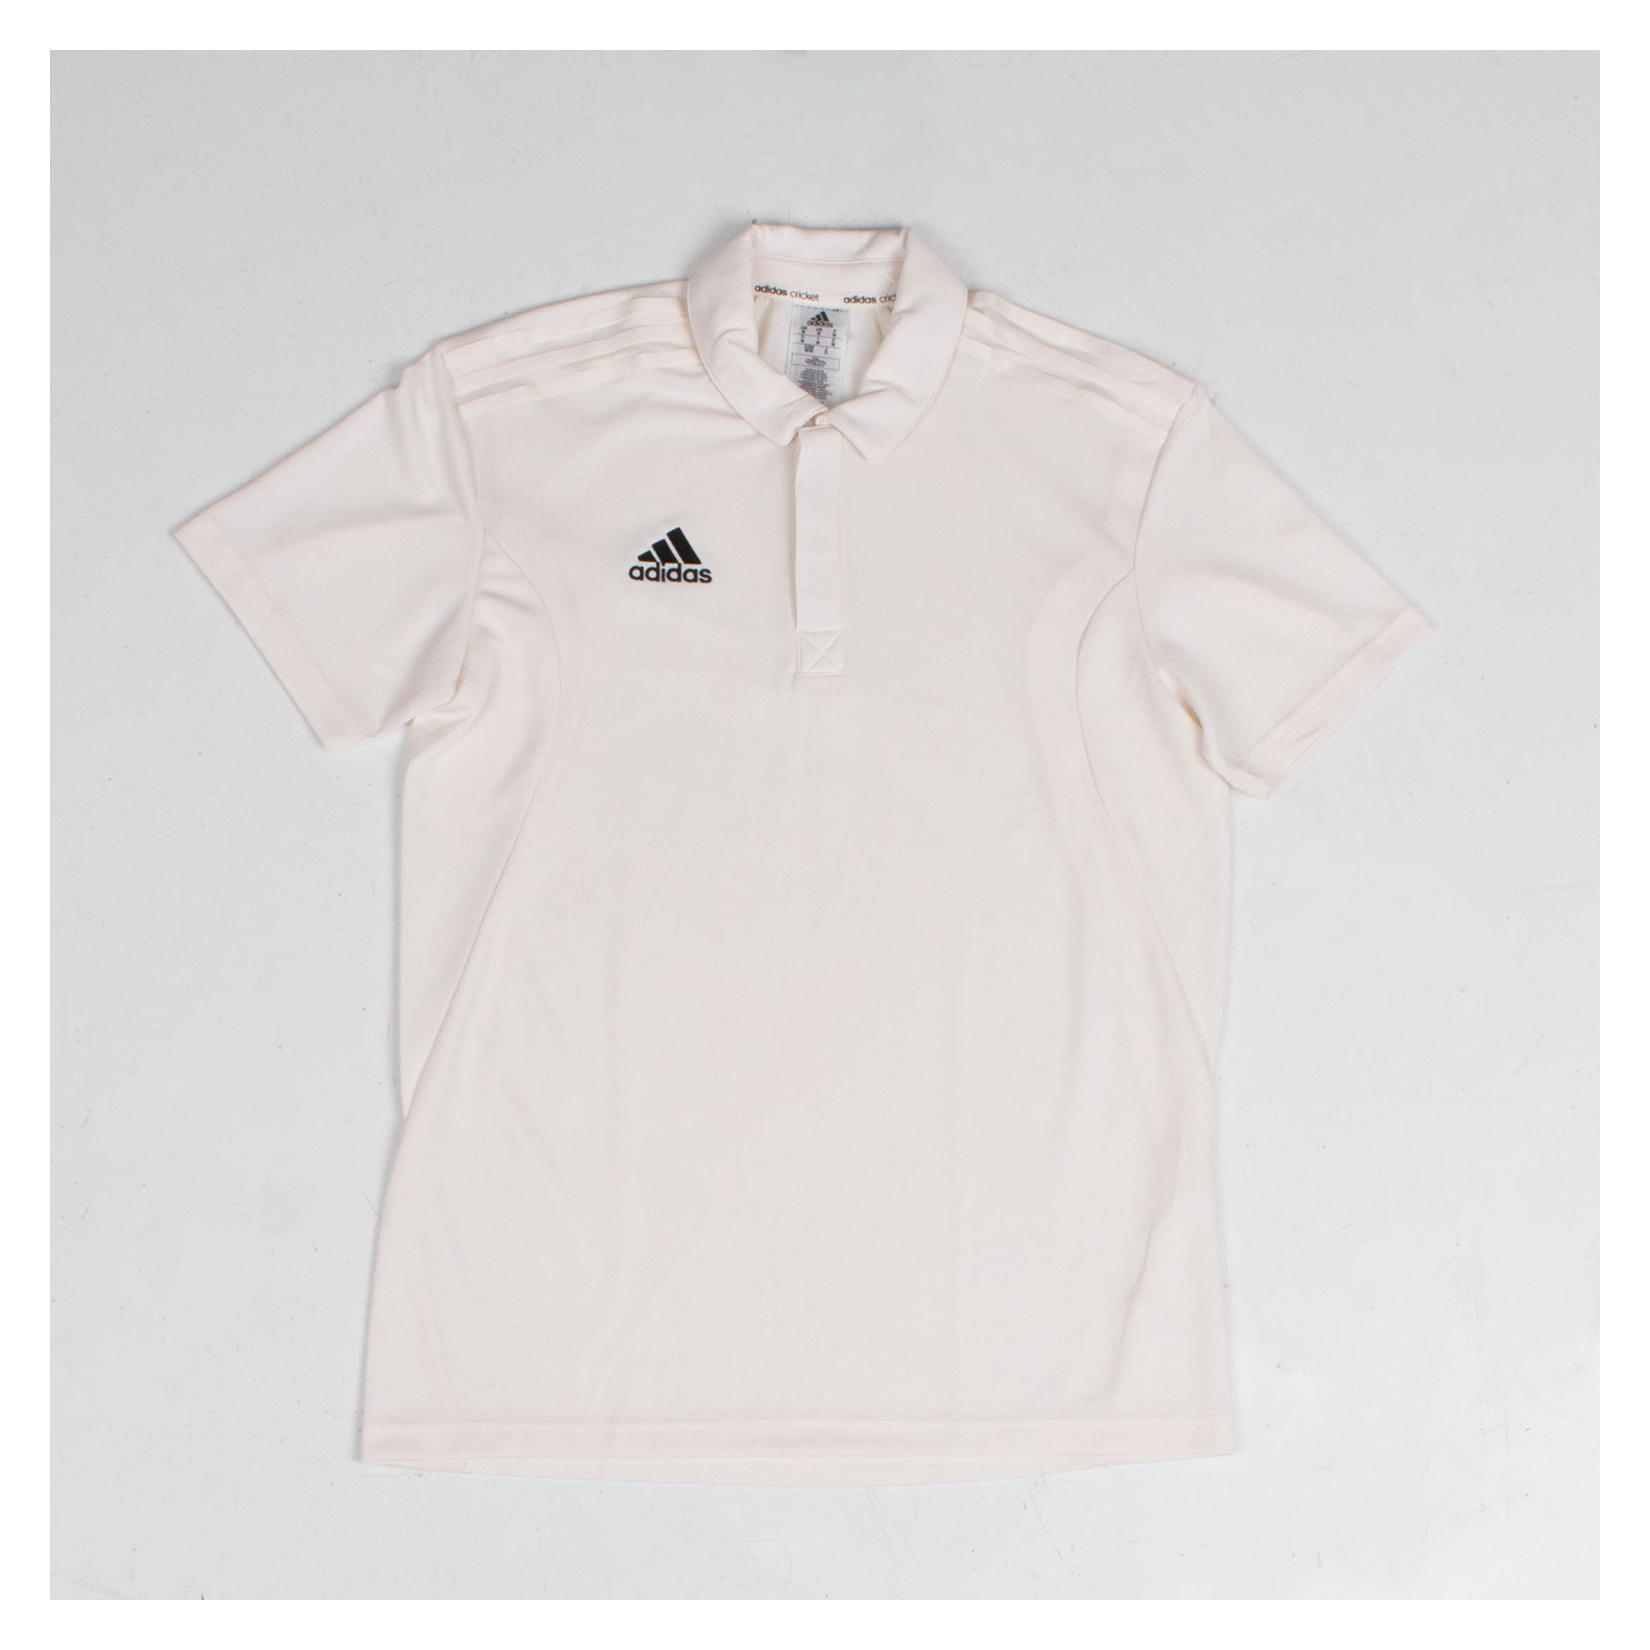 adidas Elite Short Sleeve Cricket Shirt